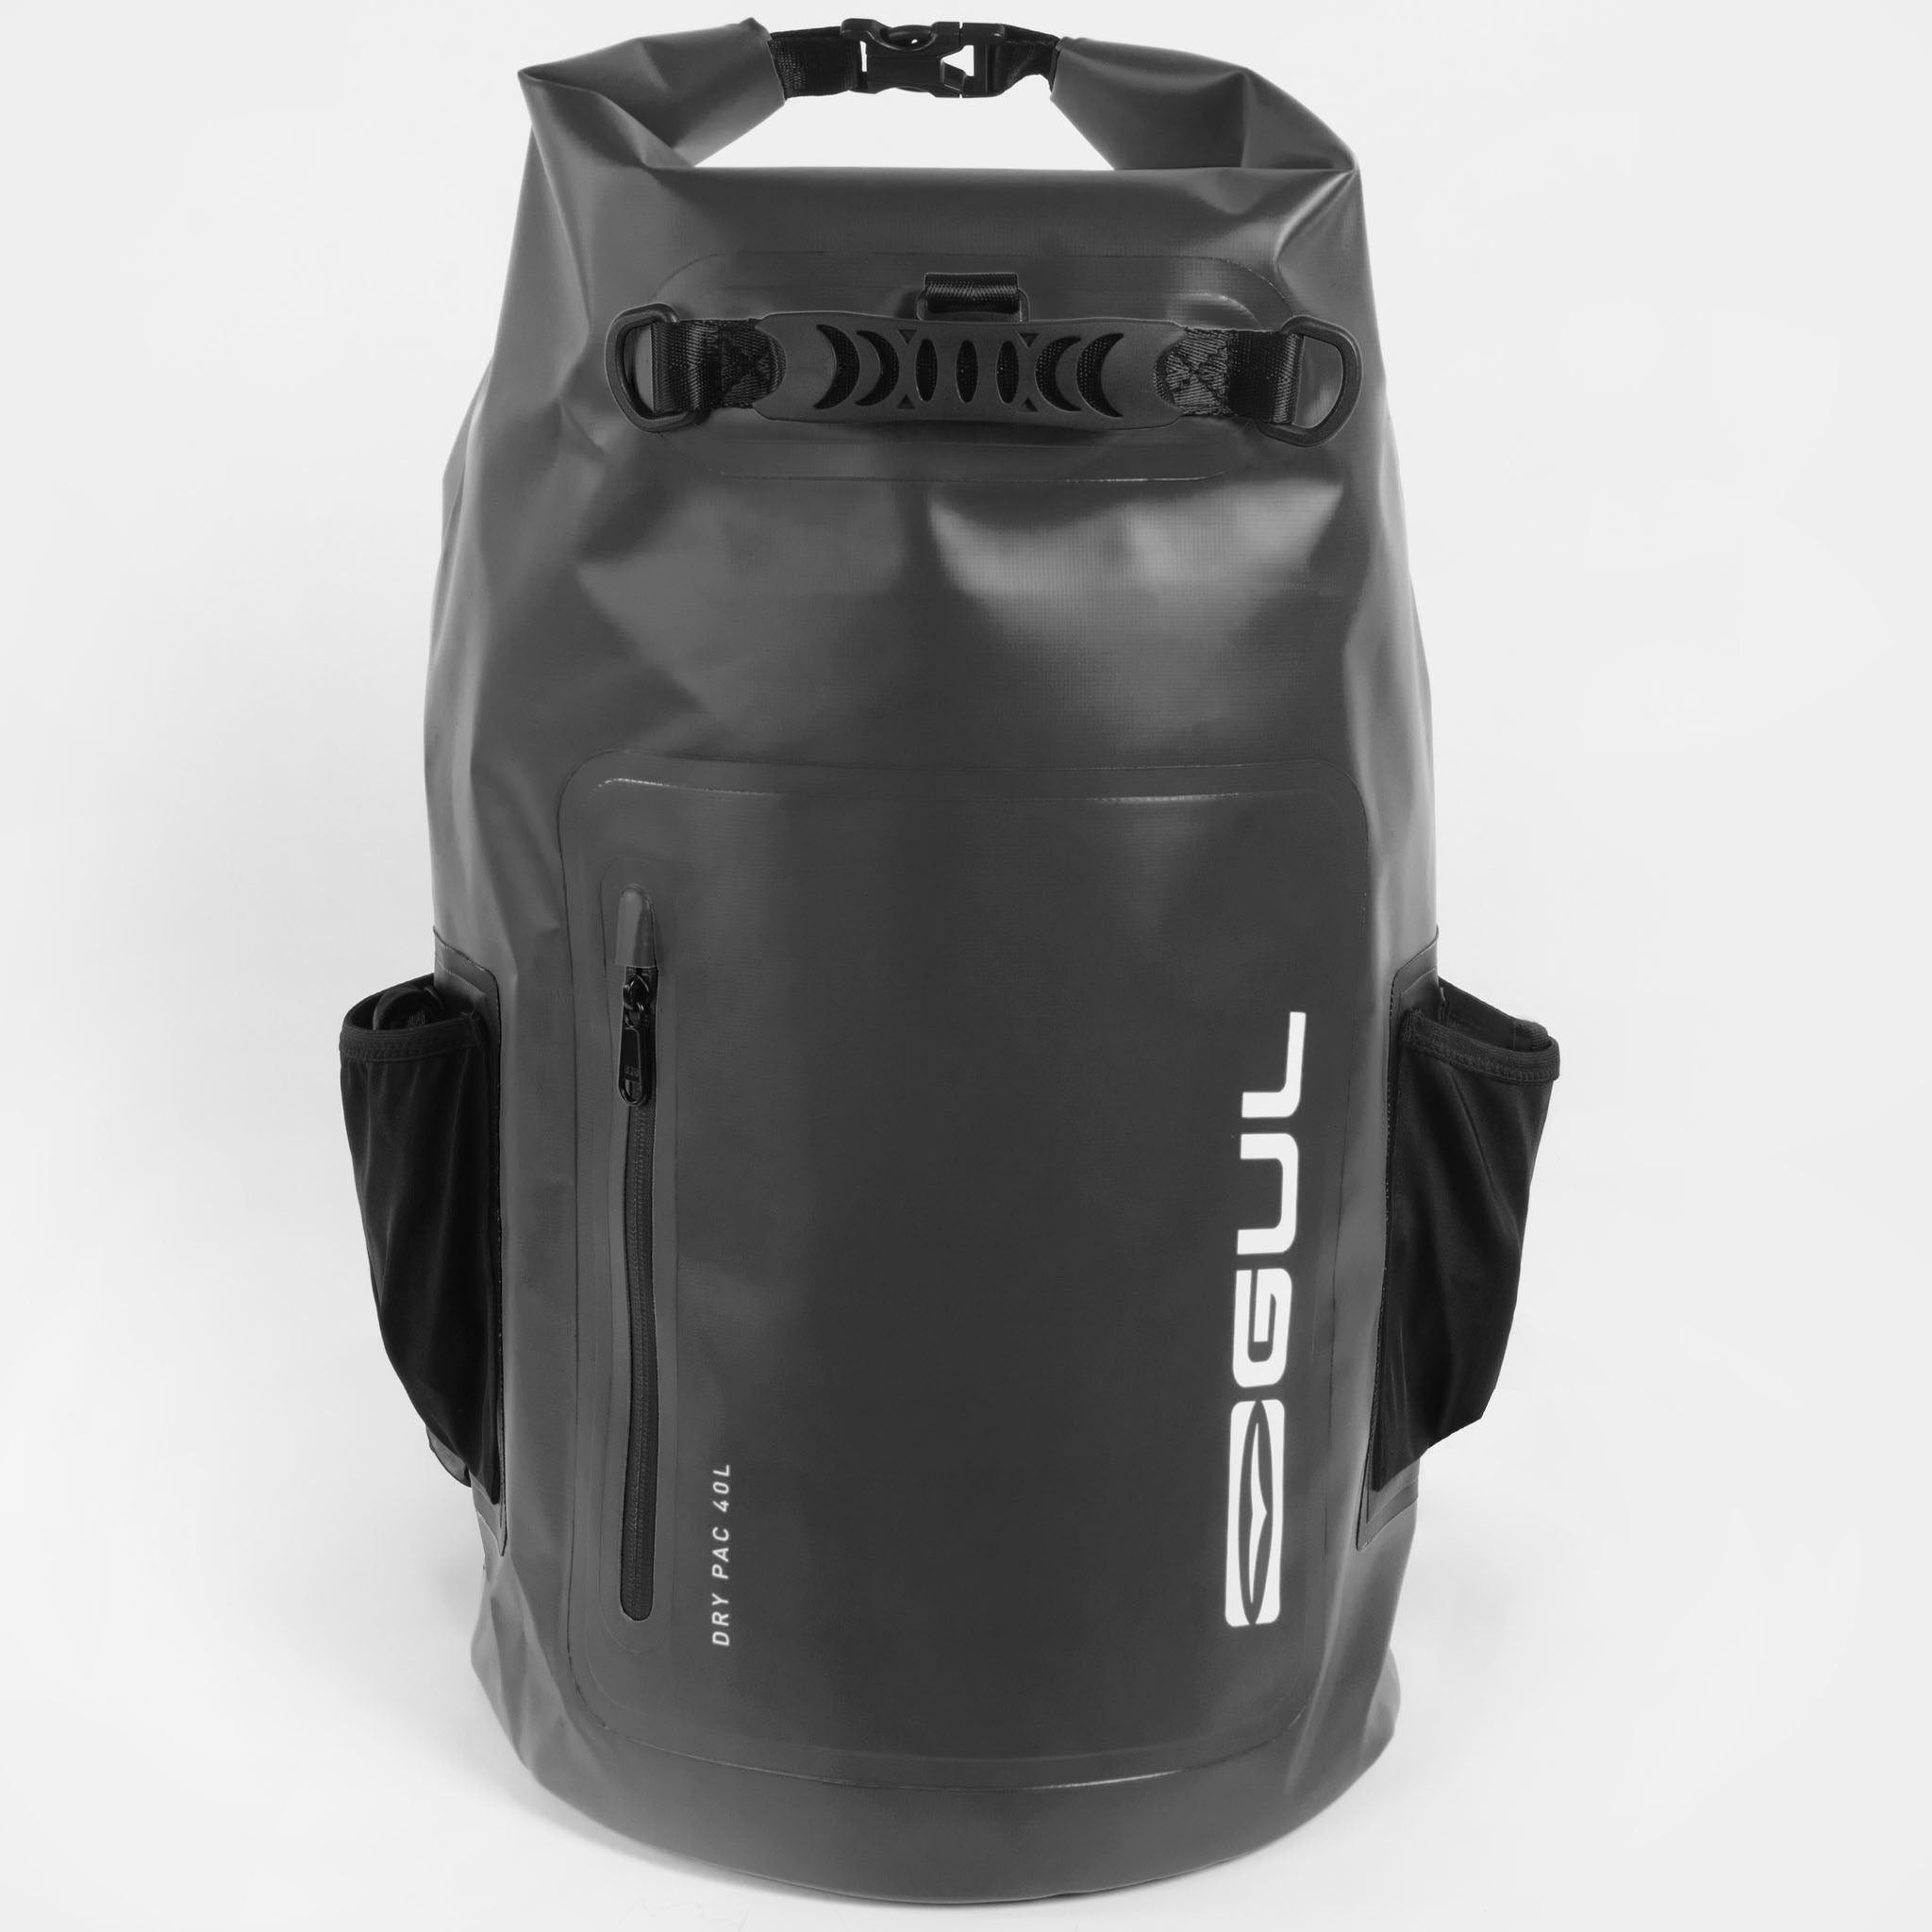 Gul 40L DryPac Back Pack - Black